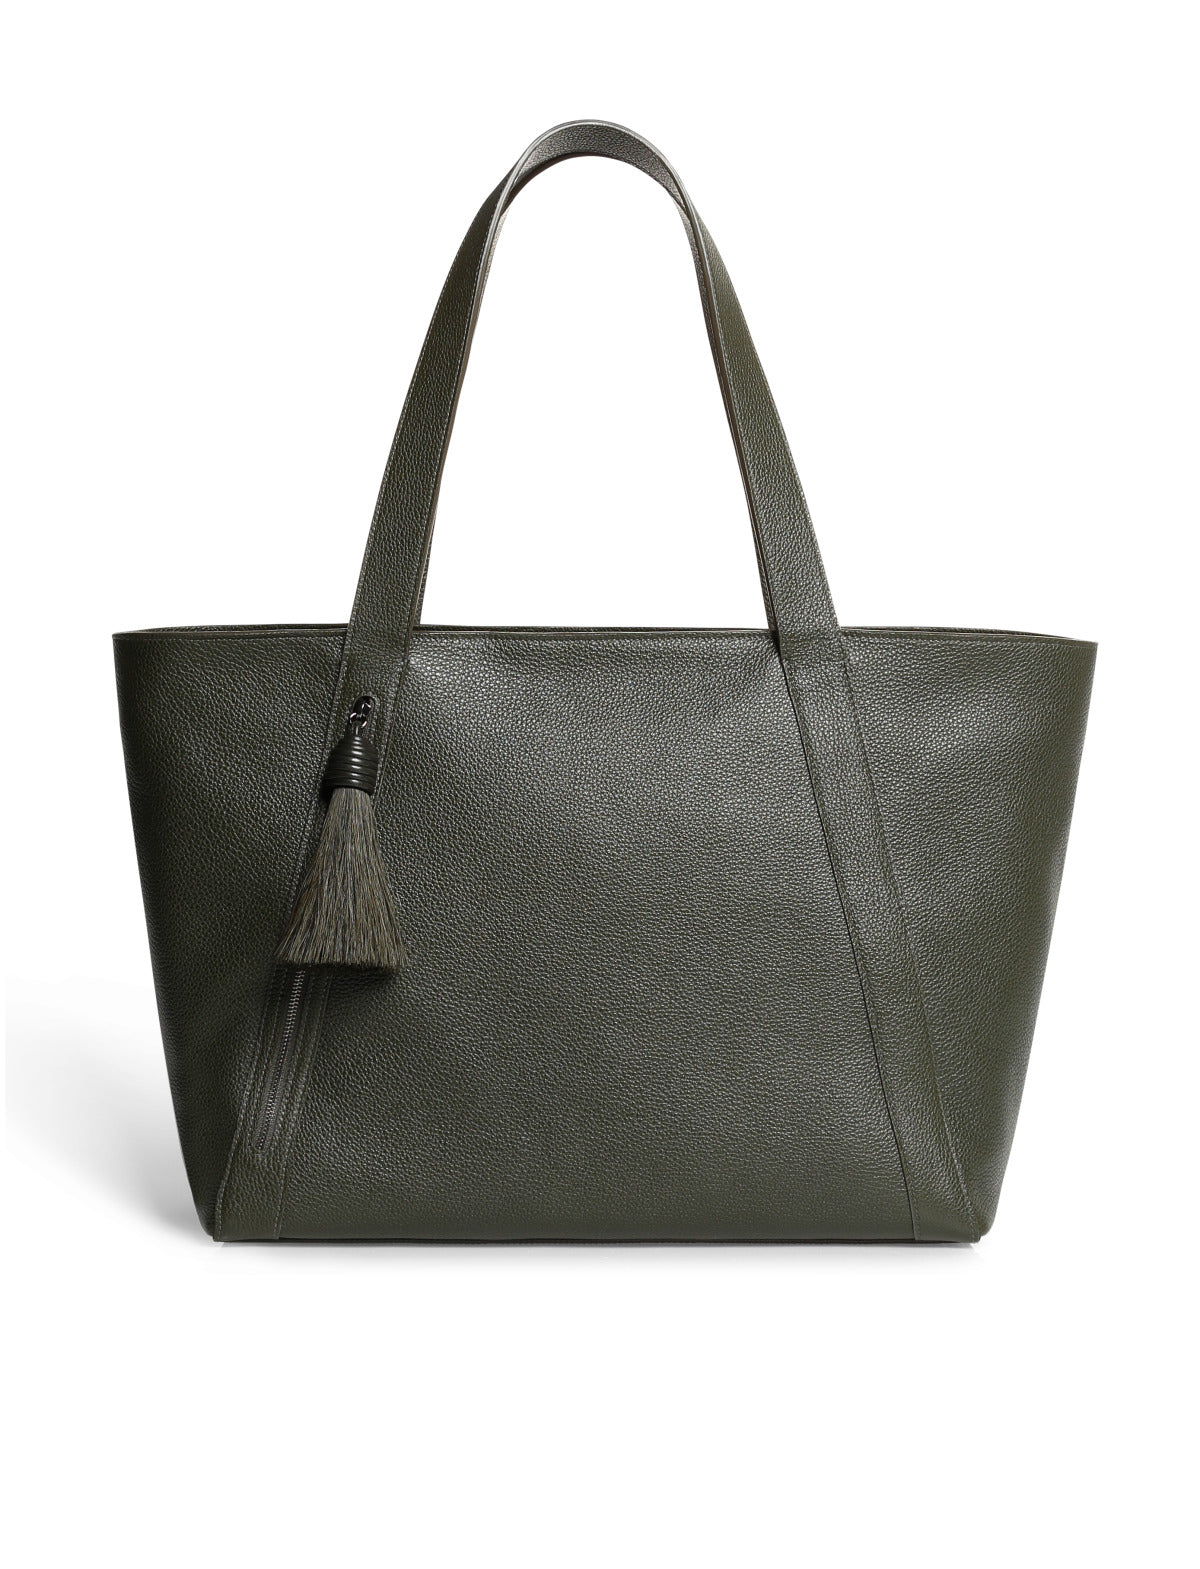 Canvas zipper bag (AKZ) White/Pink - Shop Akaneg Form Handbags